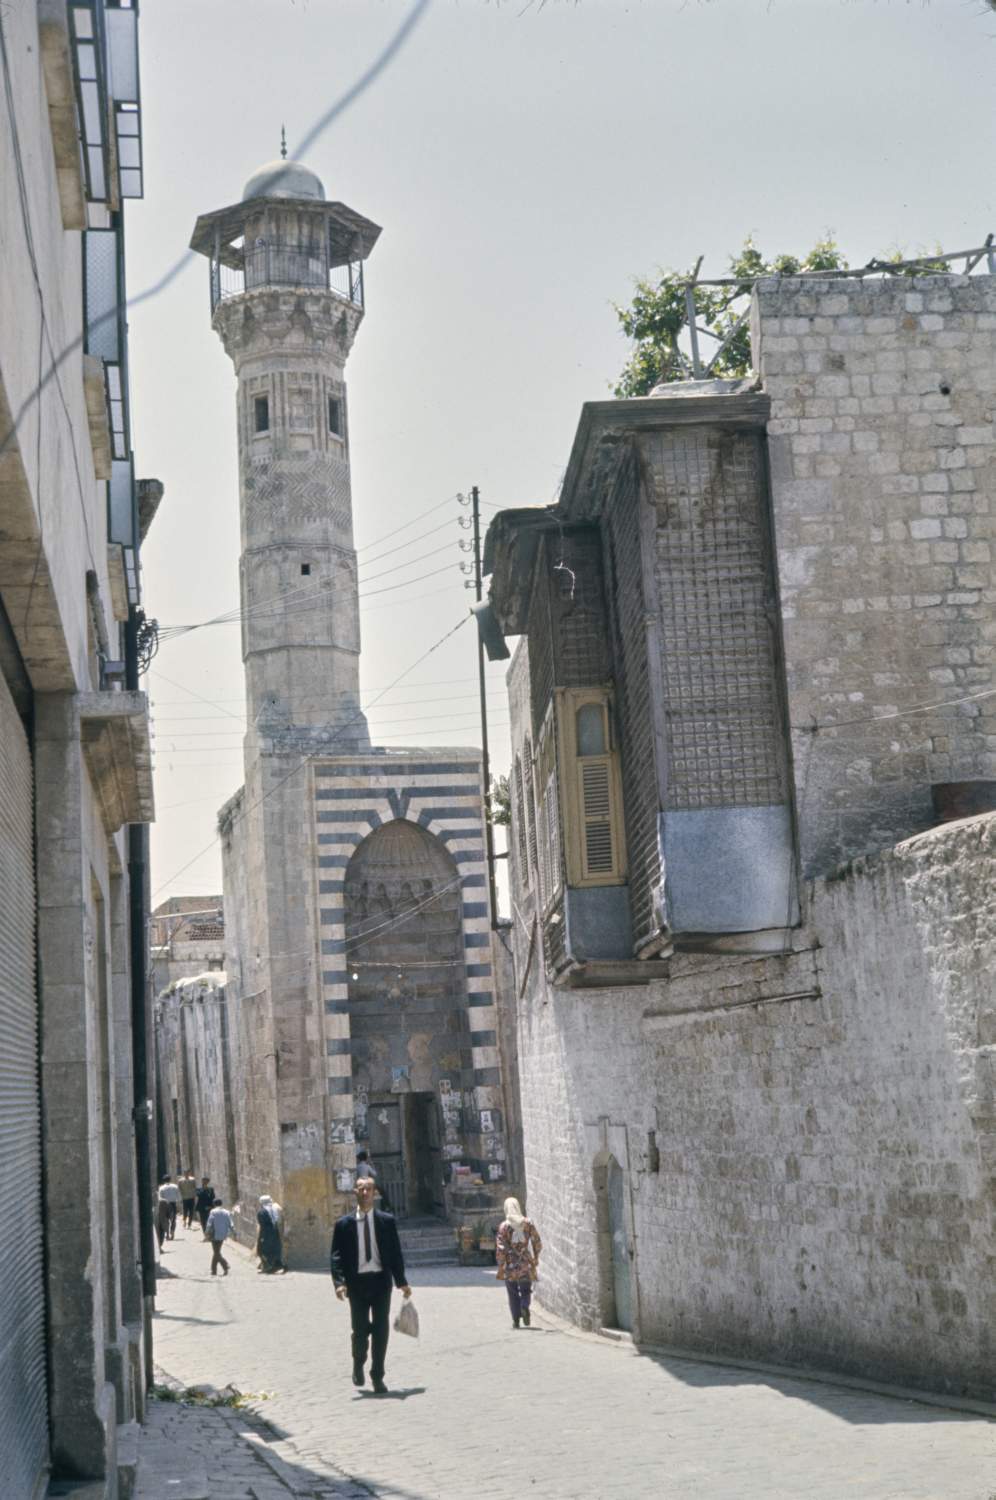 Entry Portal and Minaret